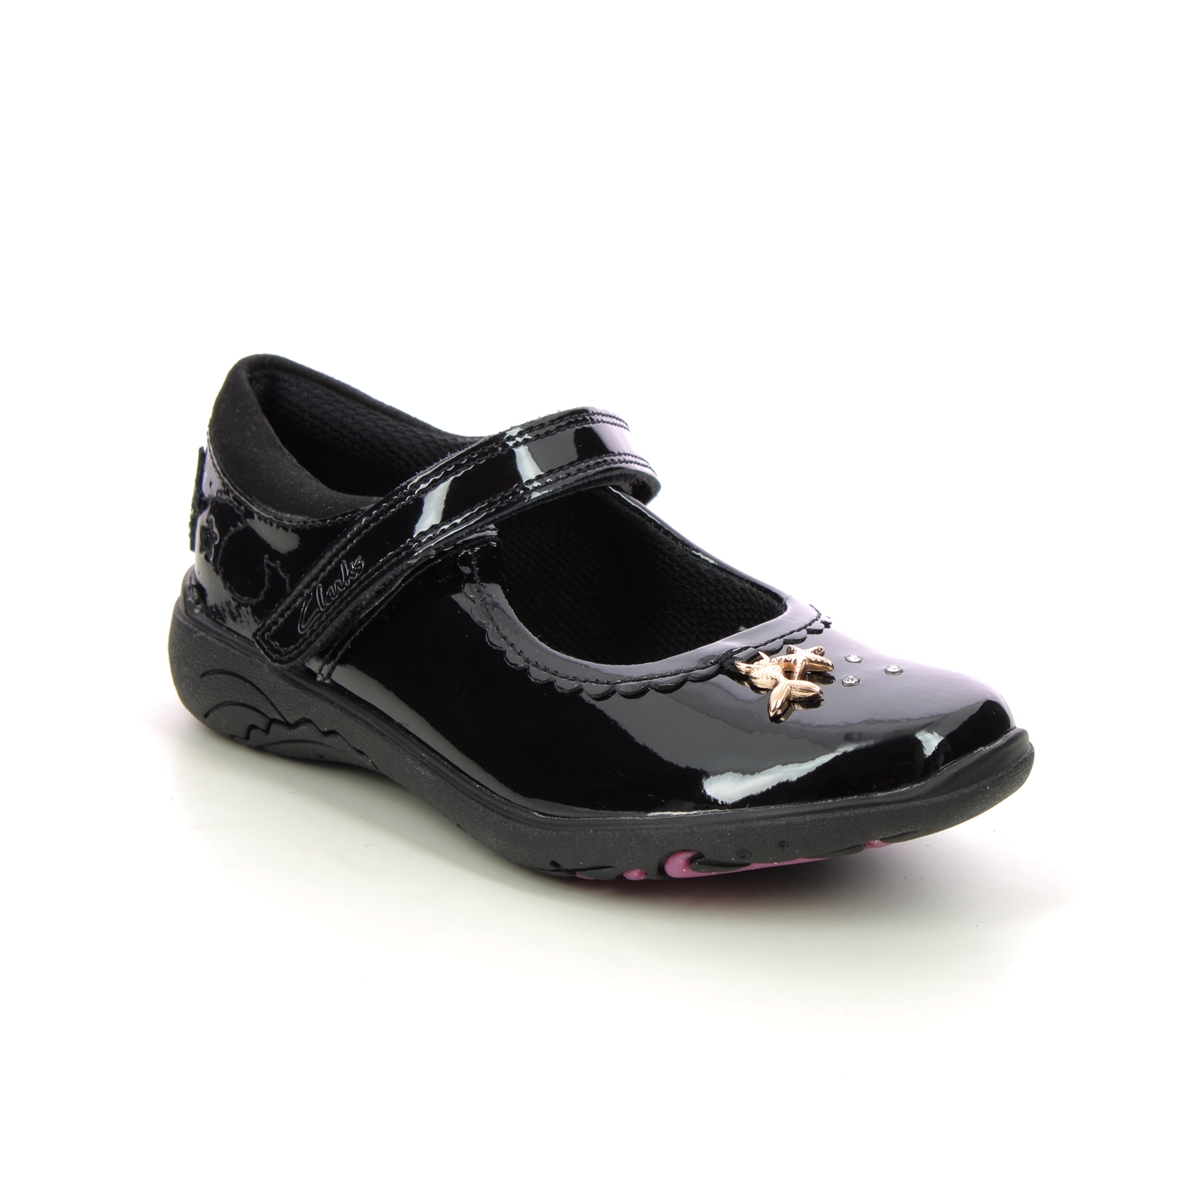 Clarks Relda Sea K Mary Jane Black Patent Kids Girls School Shoes 722417G In Size 13 In Plain Black Patent G Width Fitting For School For kids